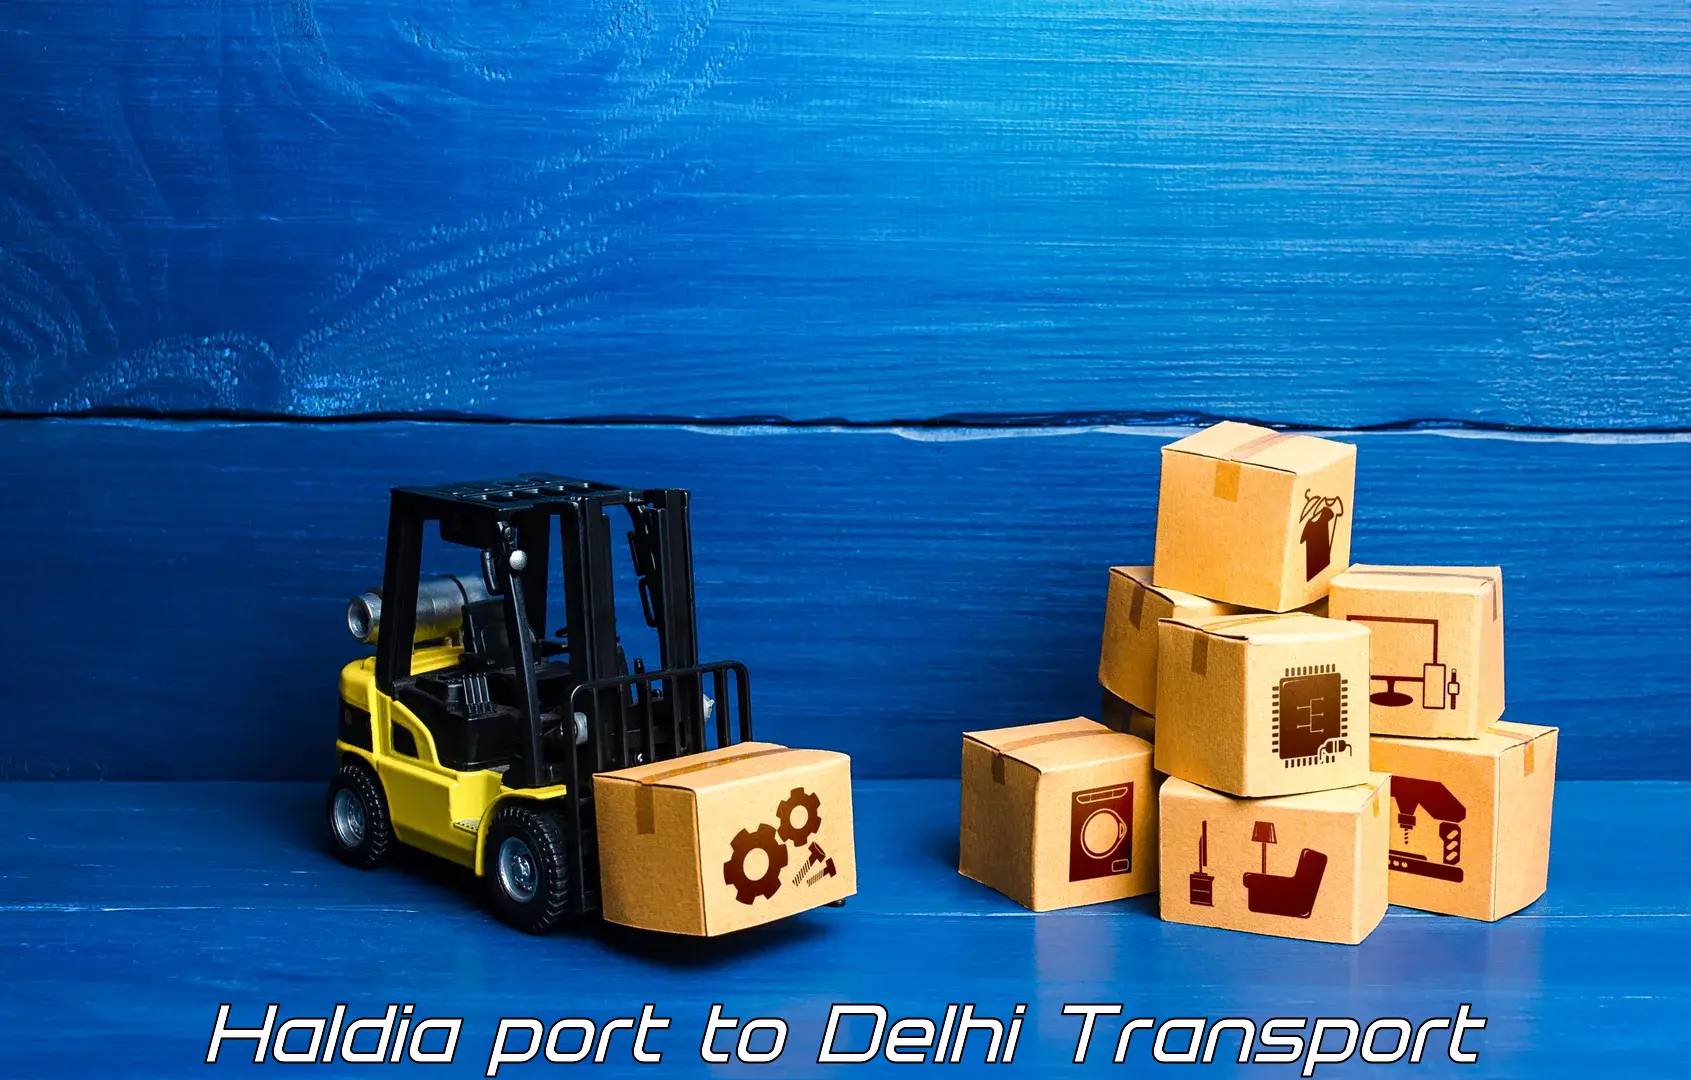 Bike transport service Haldia port to Delhi